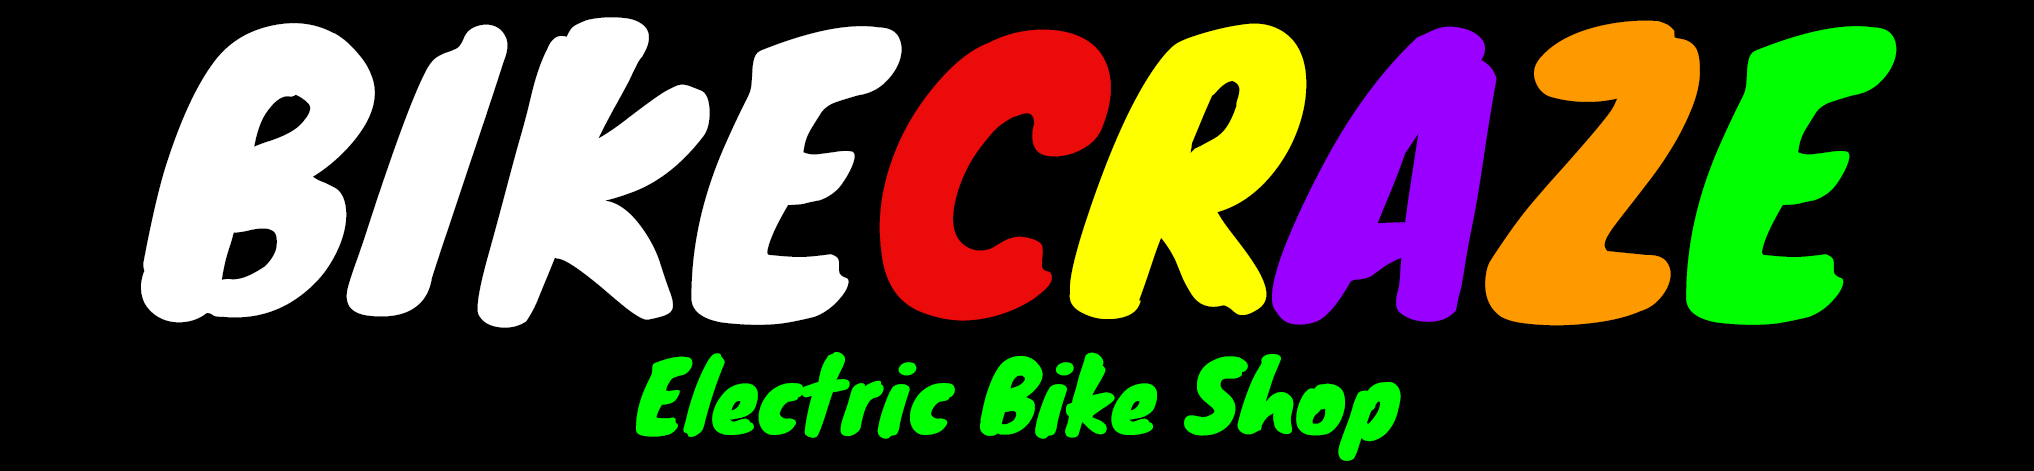 Bikecraze Electric Bike Shop